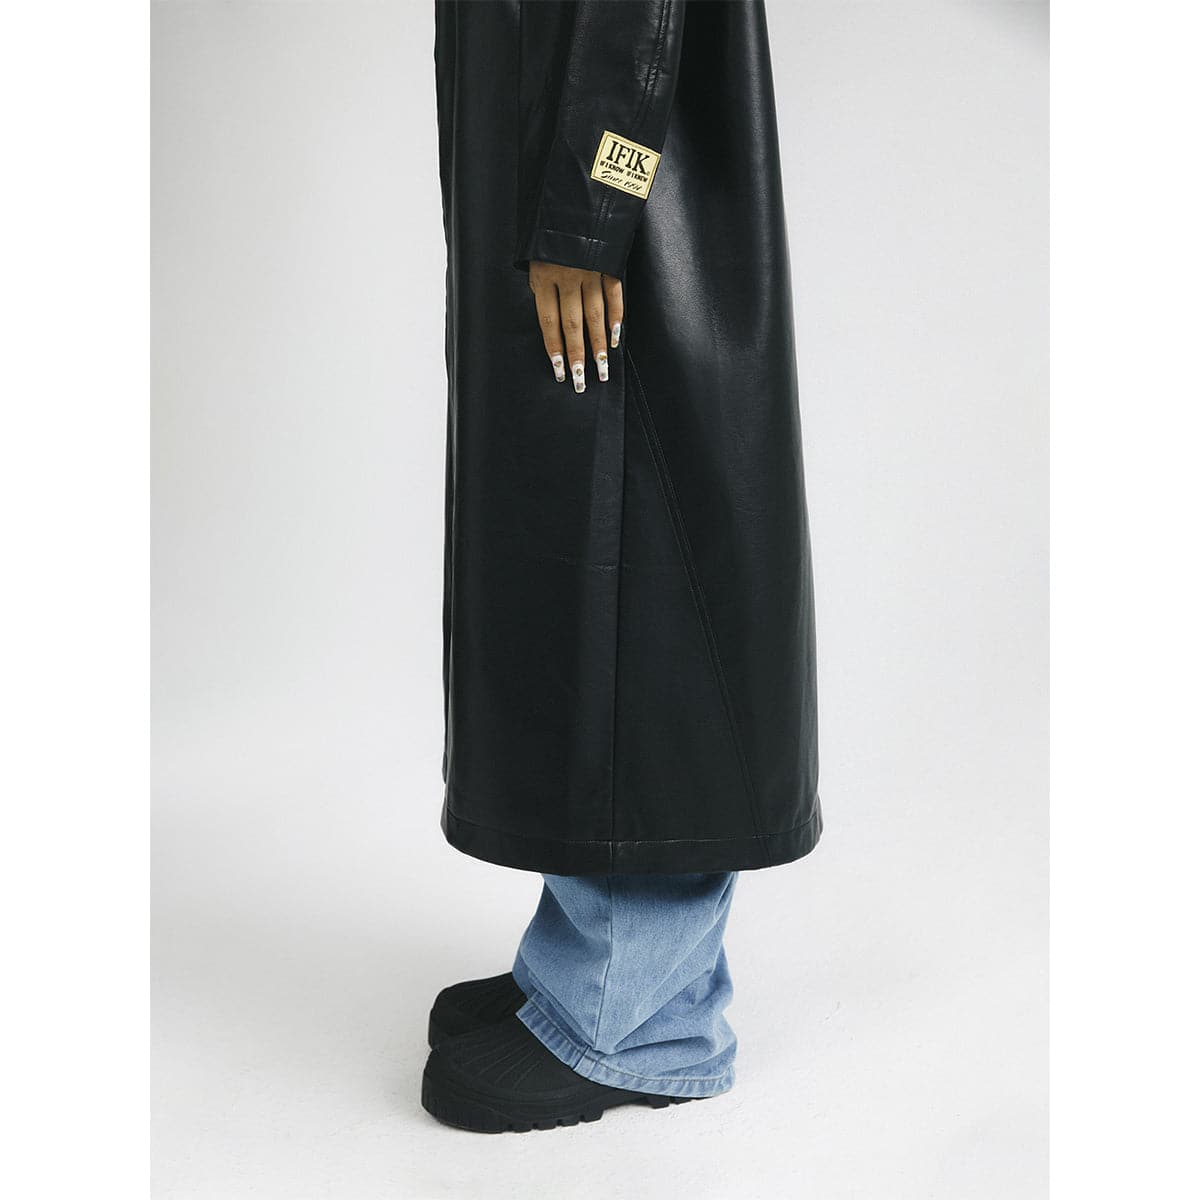 Black Leather Hooded Coat With Oversized Zipper - chiclara